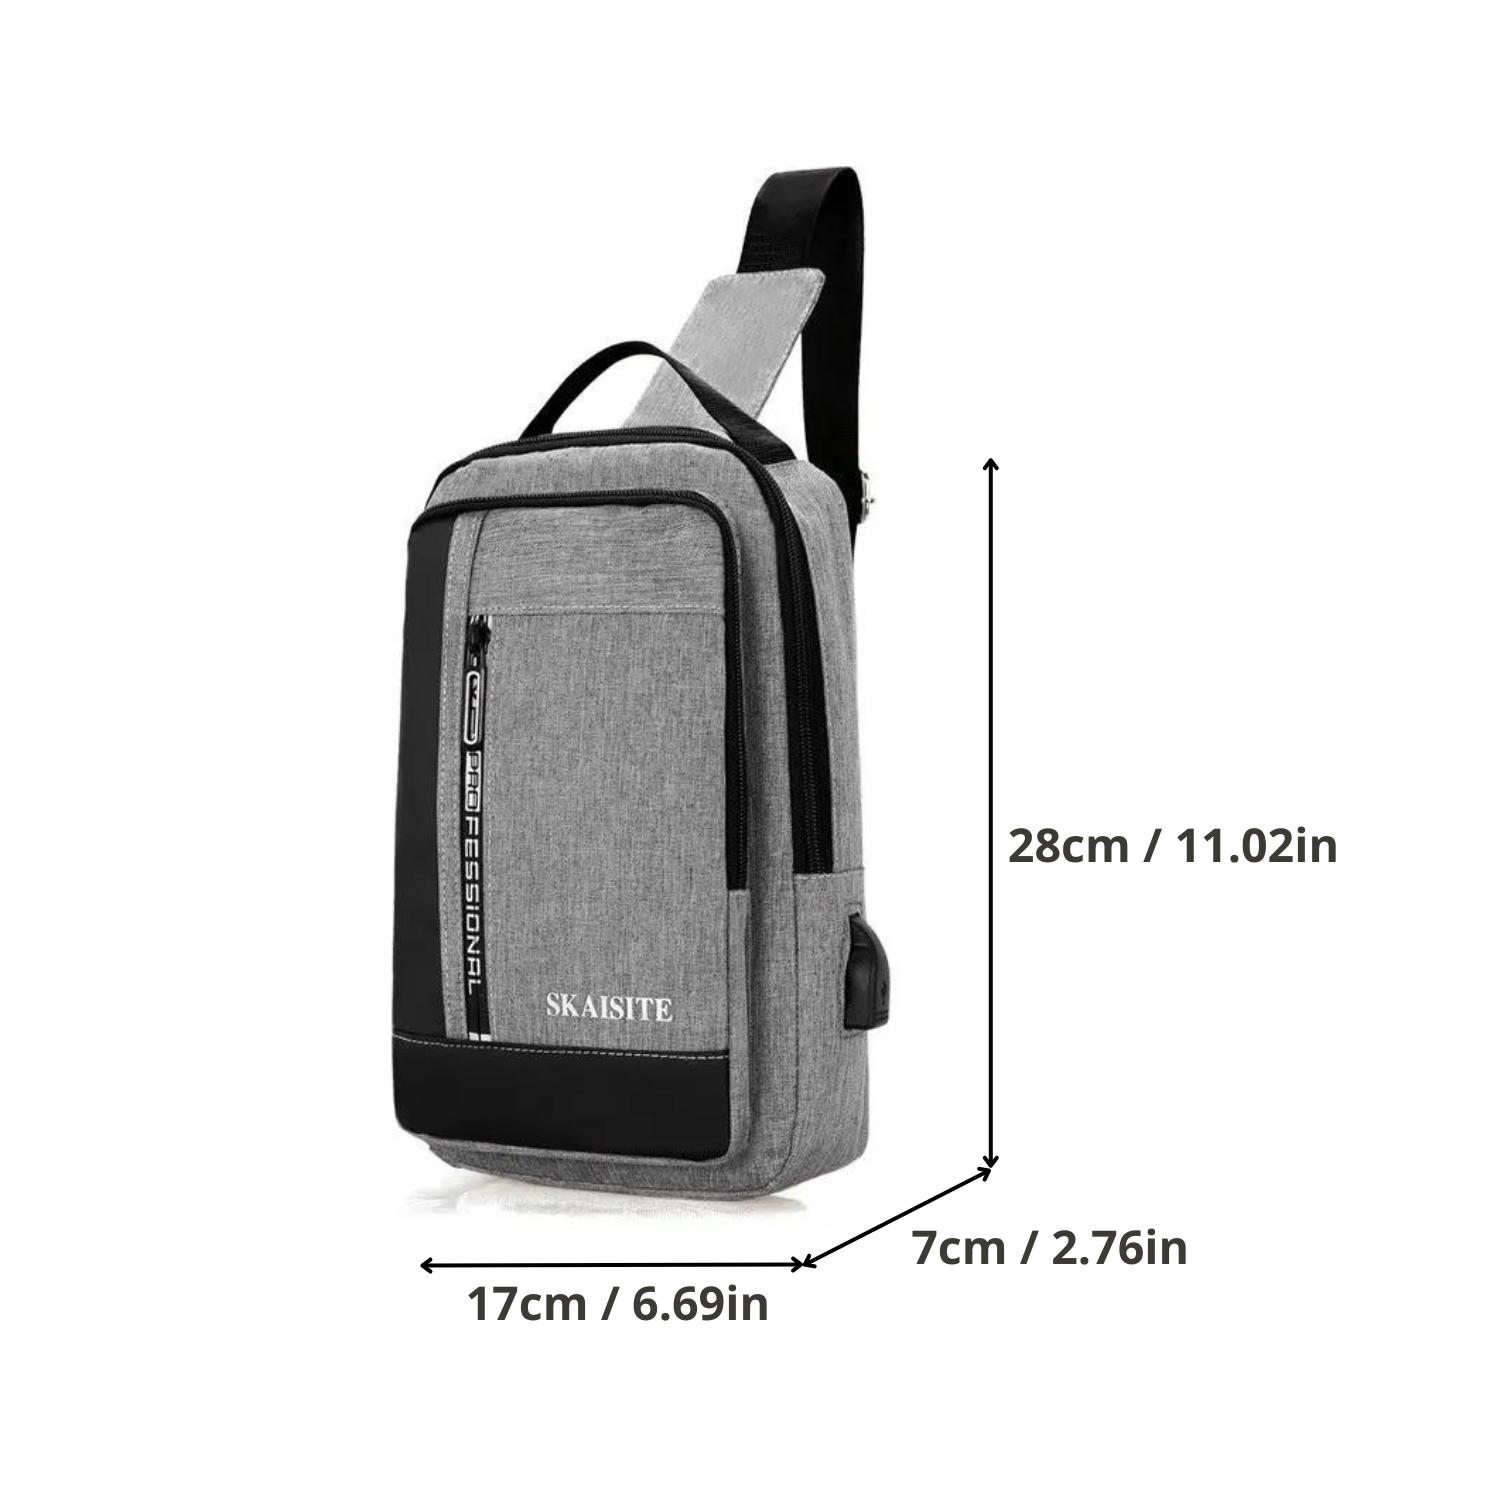 Sleek Urban Chest Bag with USB Charging Port